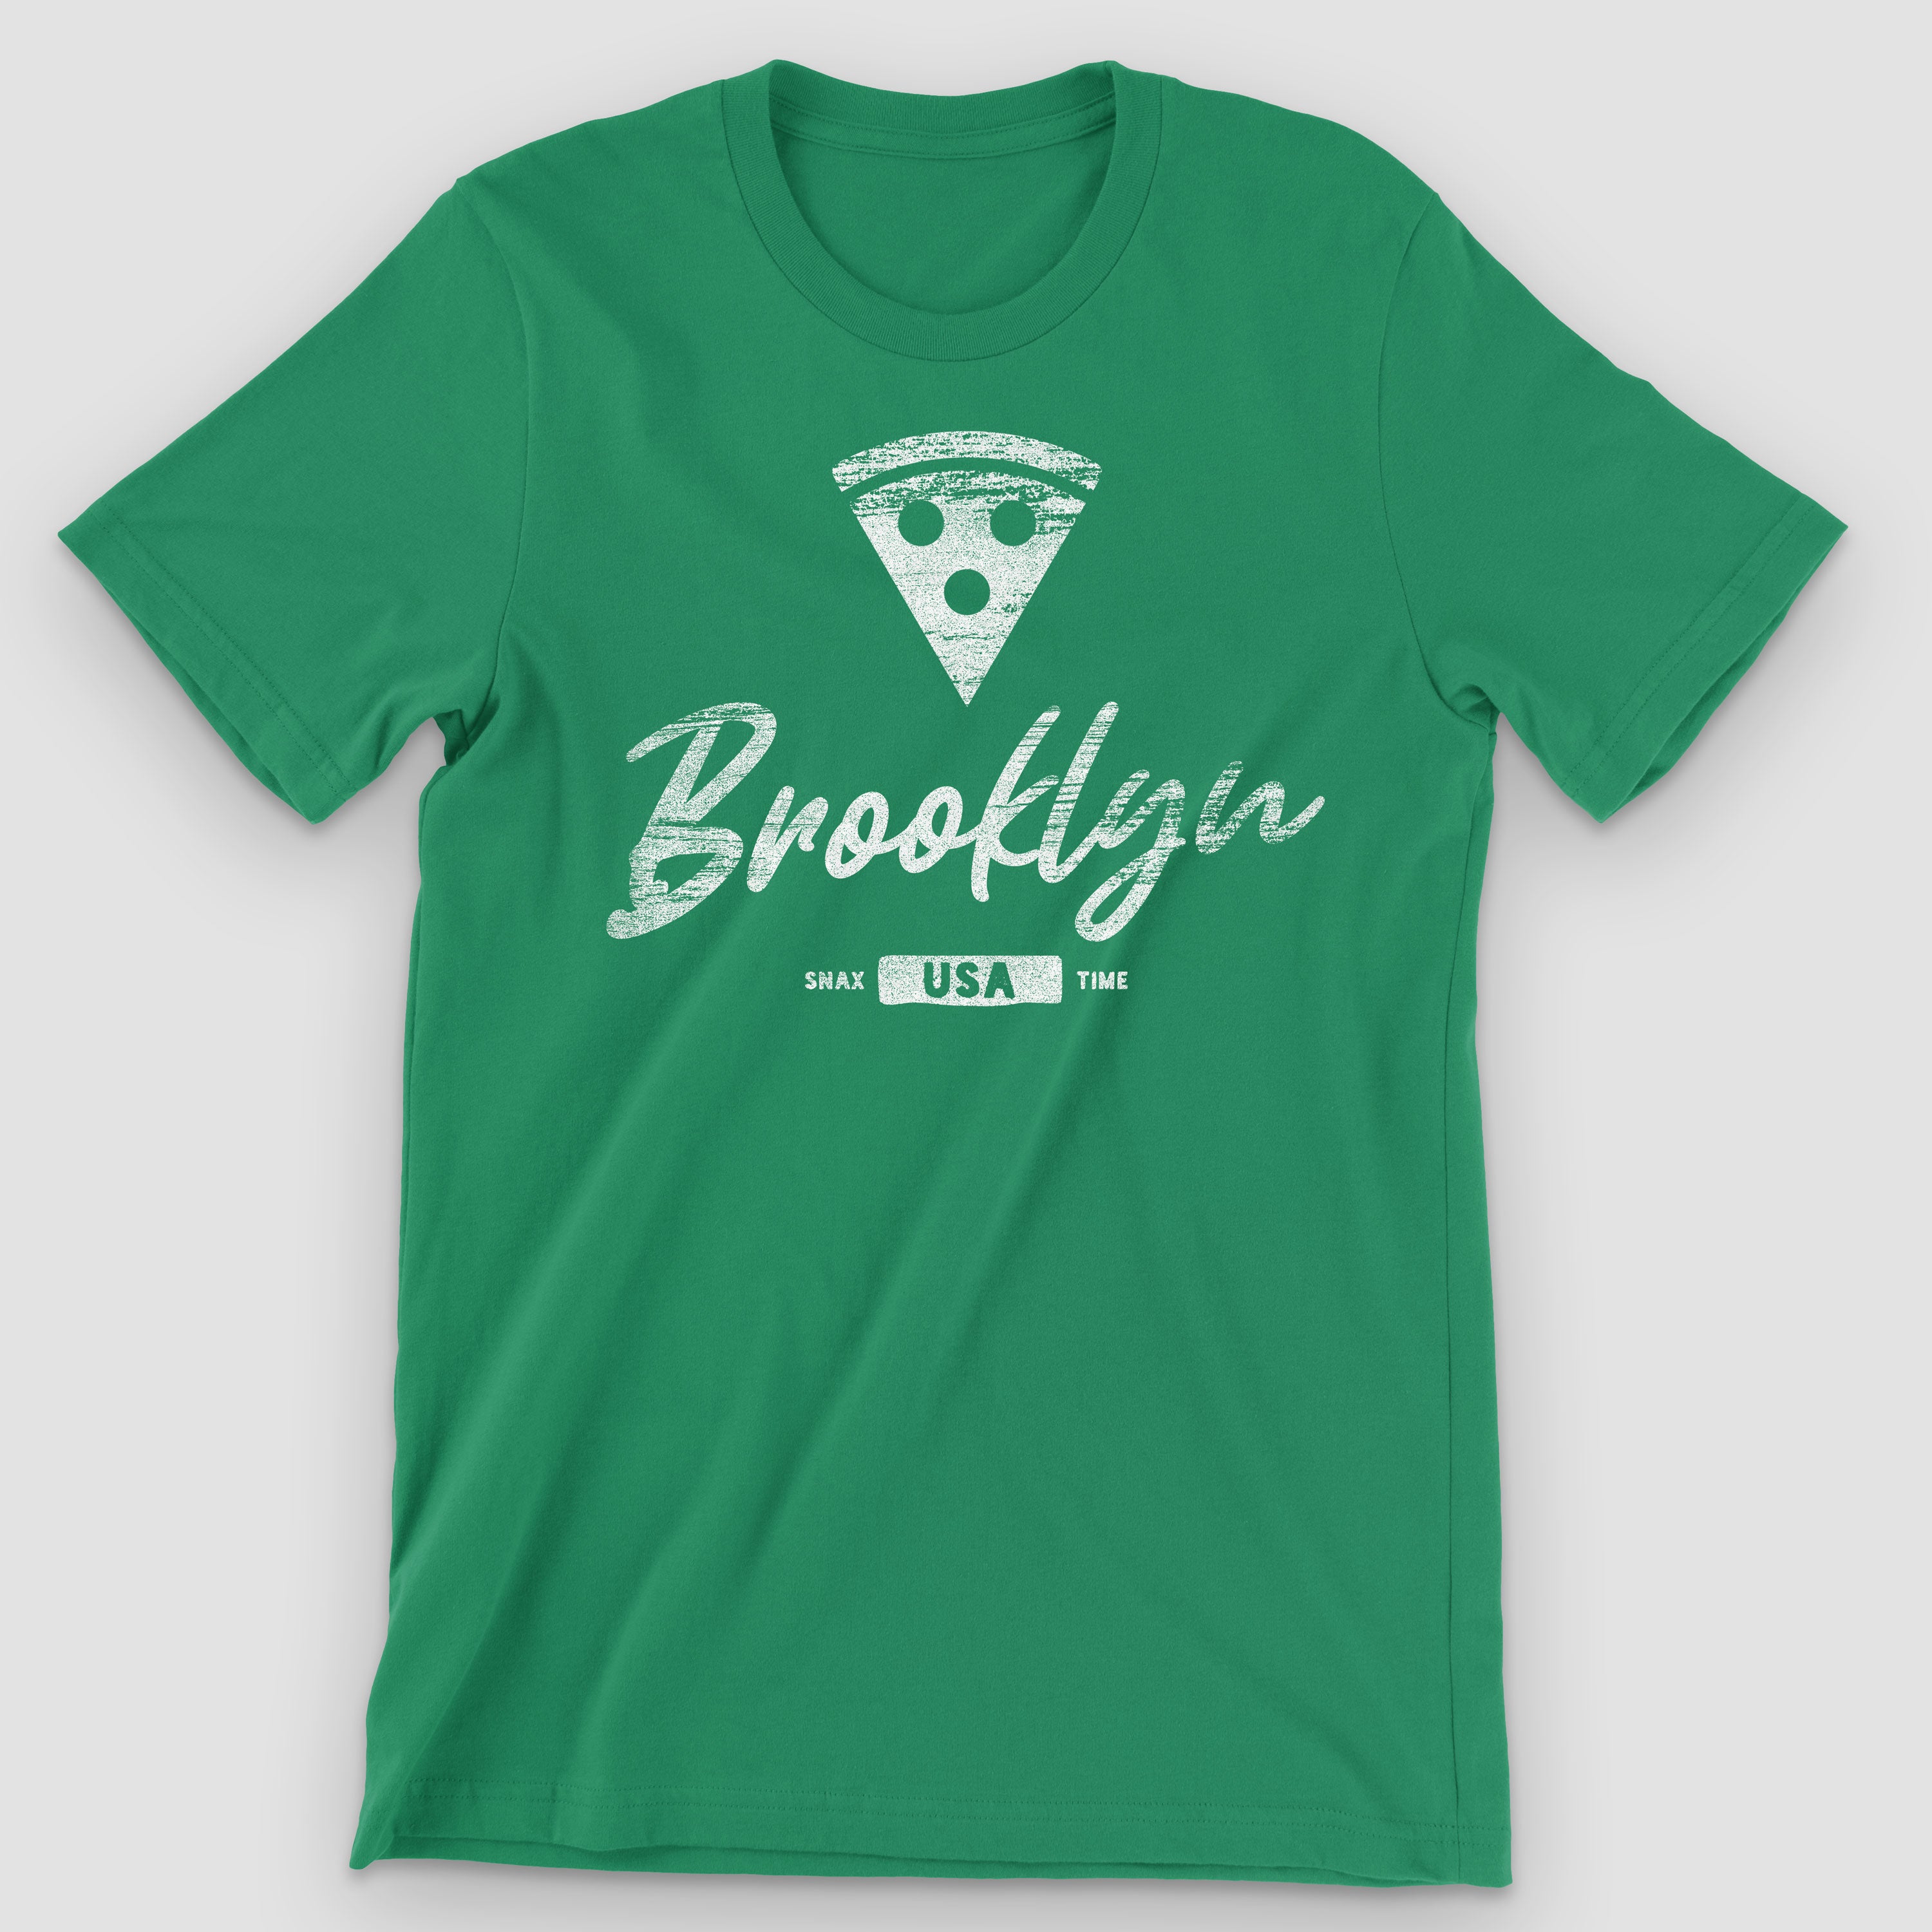 Brooklyn New York Pizza Slice Graphic T-Shirt